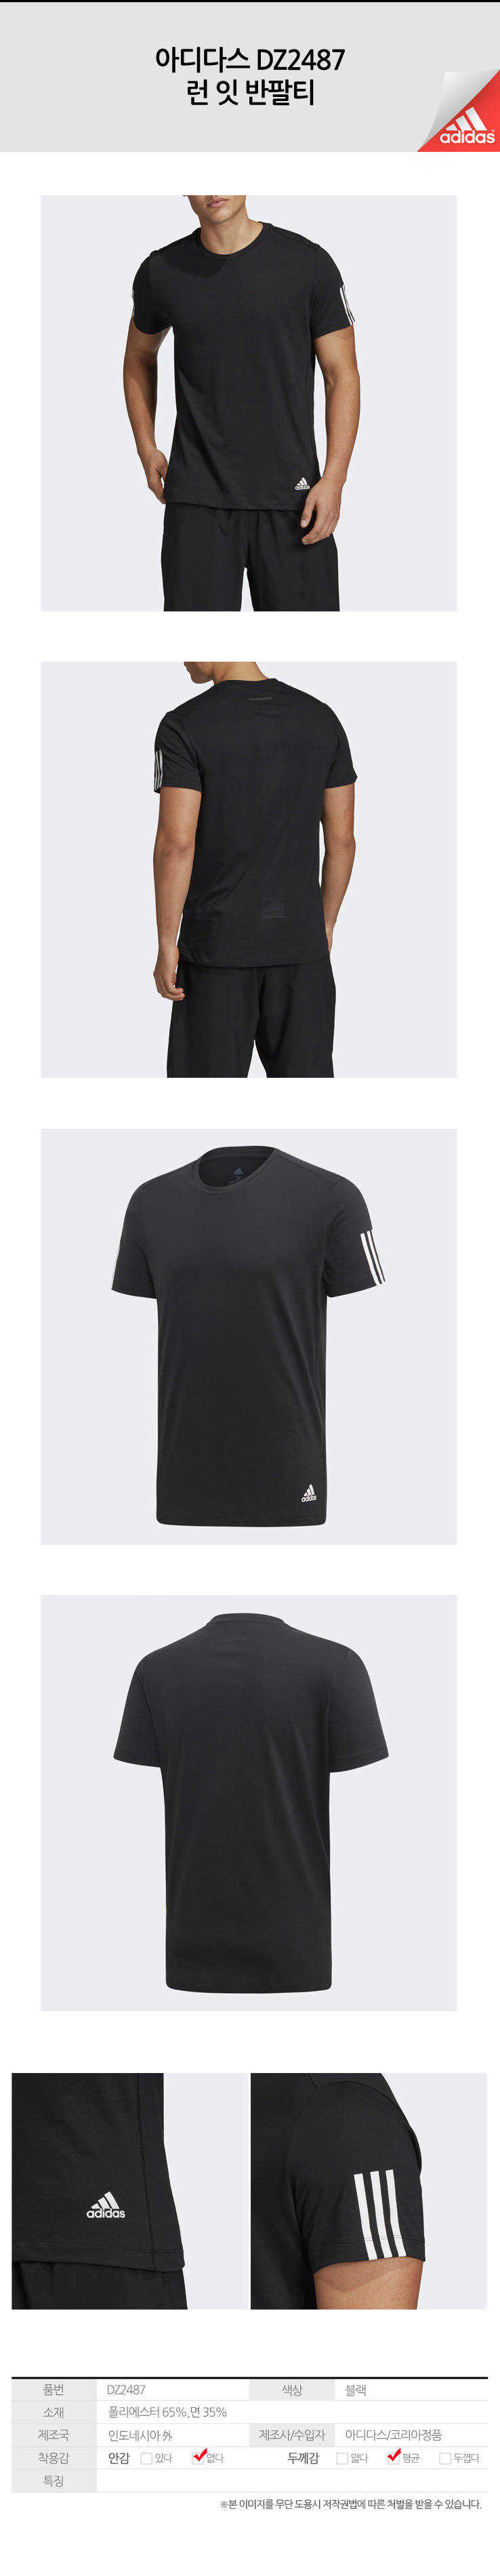 Gmarket - [Adidas]Adidas/Official Product/2021/New Arrivals/Short-Sleeve  T-Shirt/Short-Sleeve Tee/Long-Sleeve T-Shirt